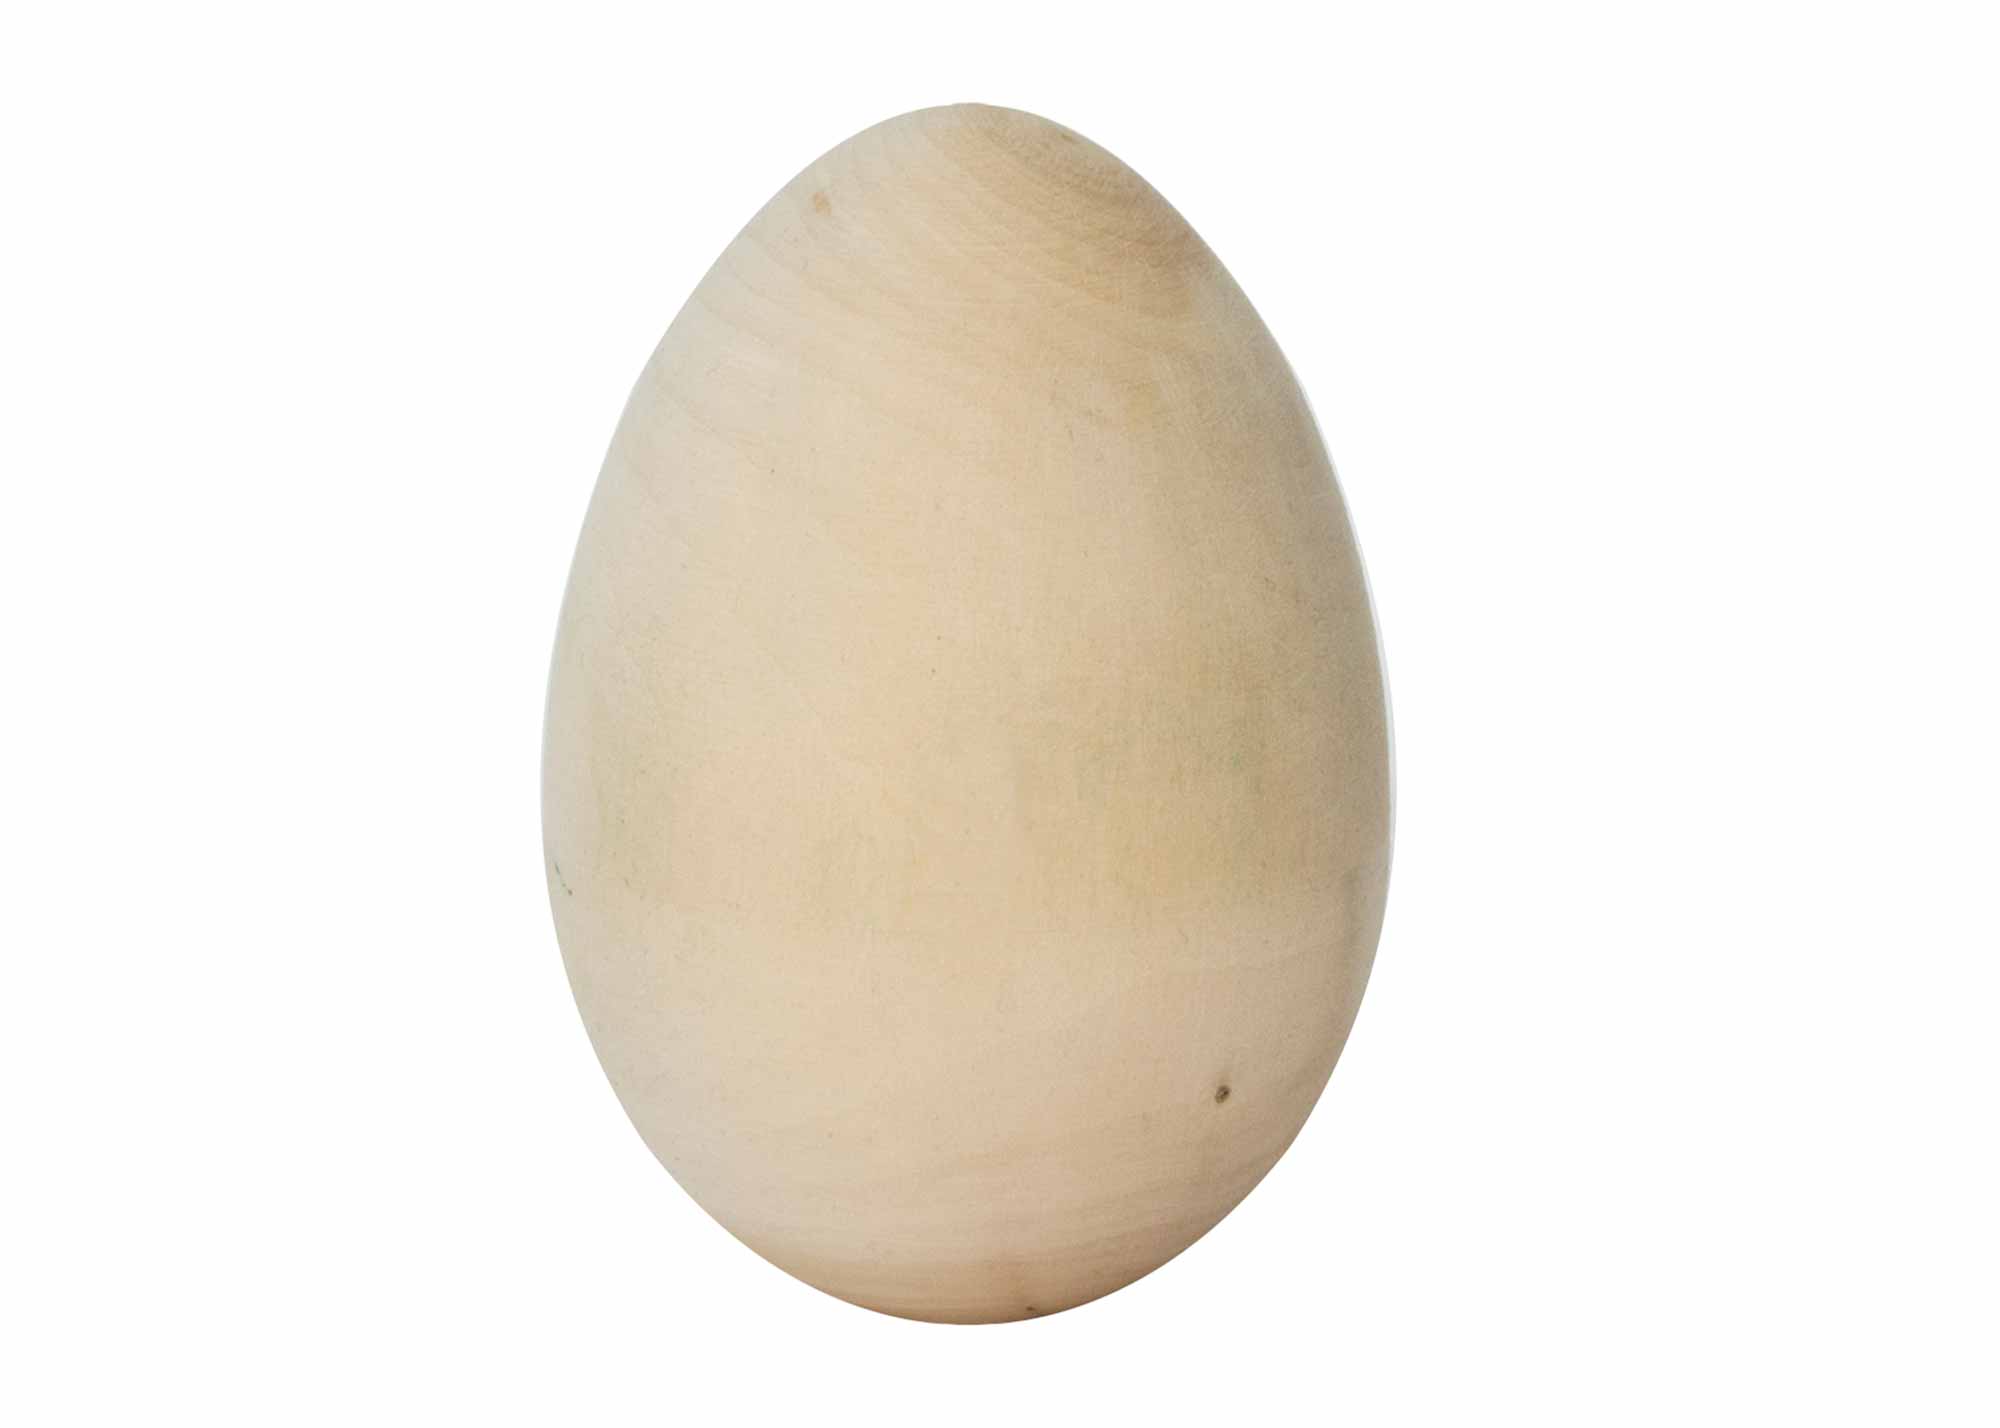 Buy Blank Hollow Wooden Goose Egg 2.25"x 3.5" at GoldenCockerel.com